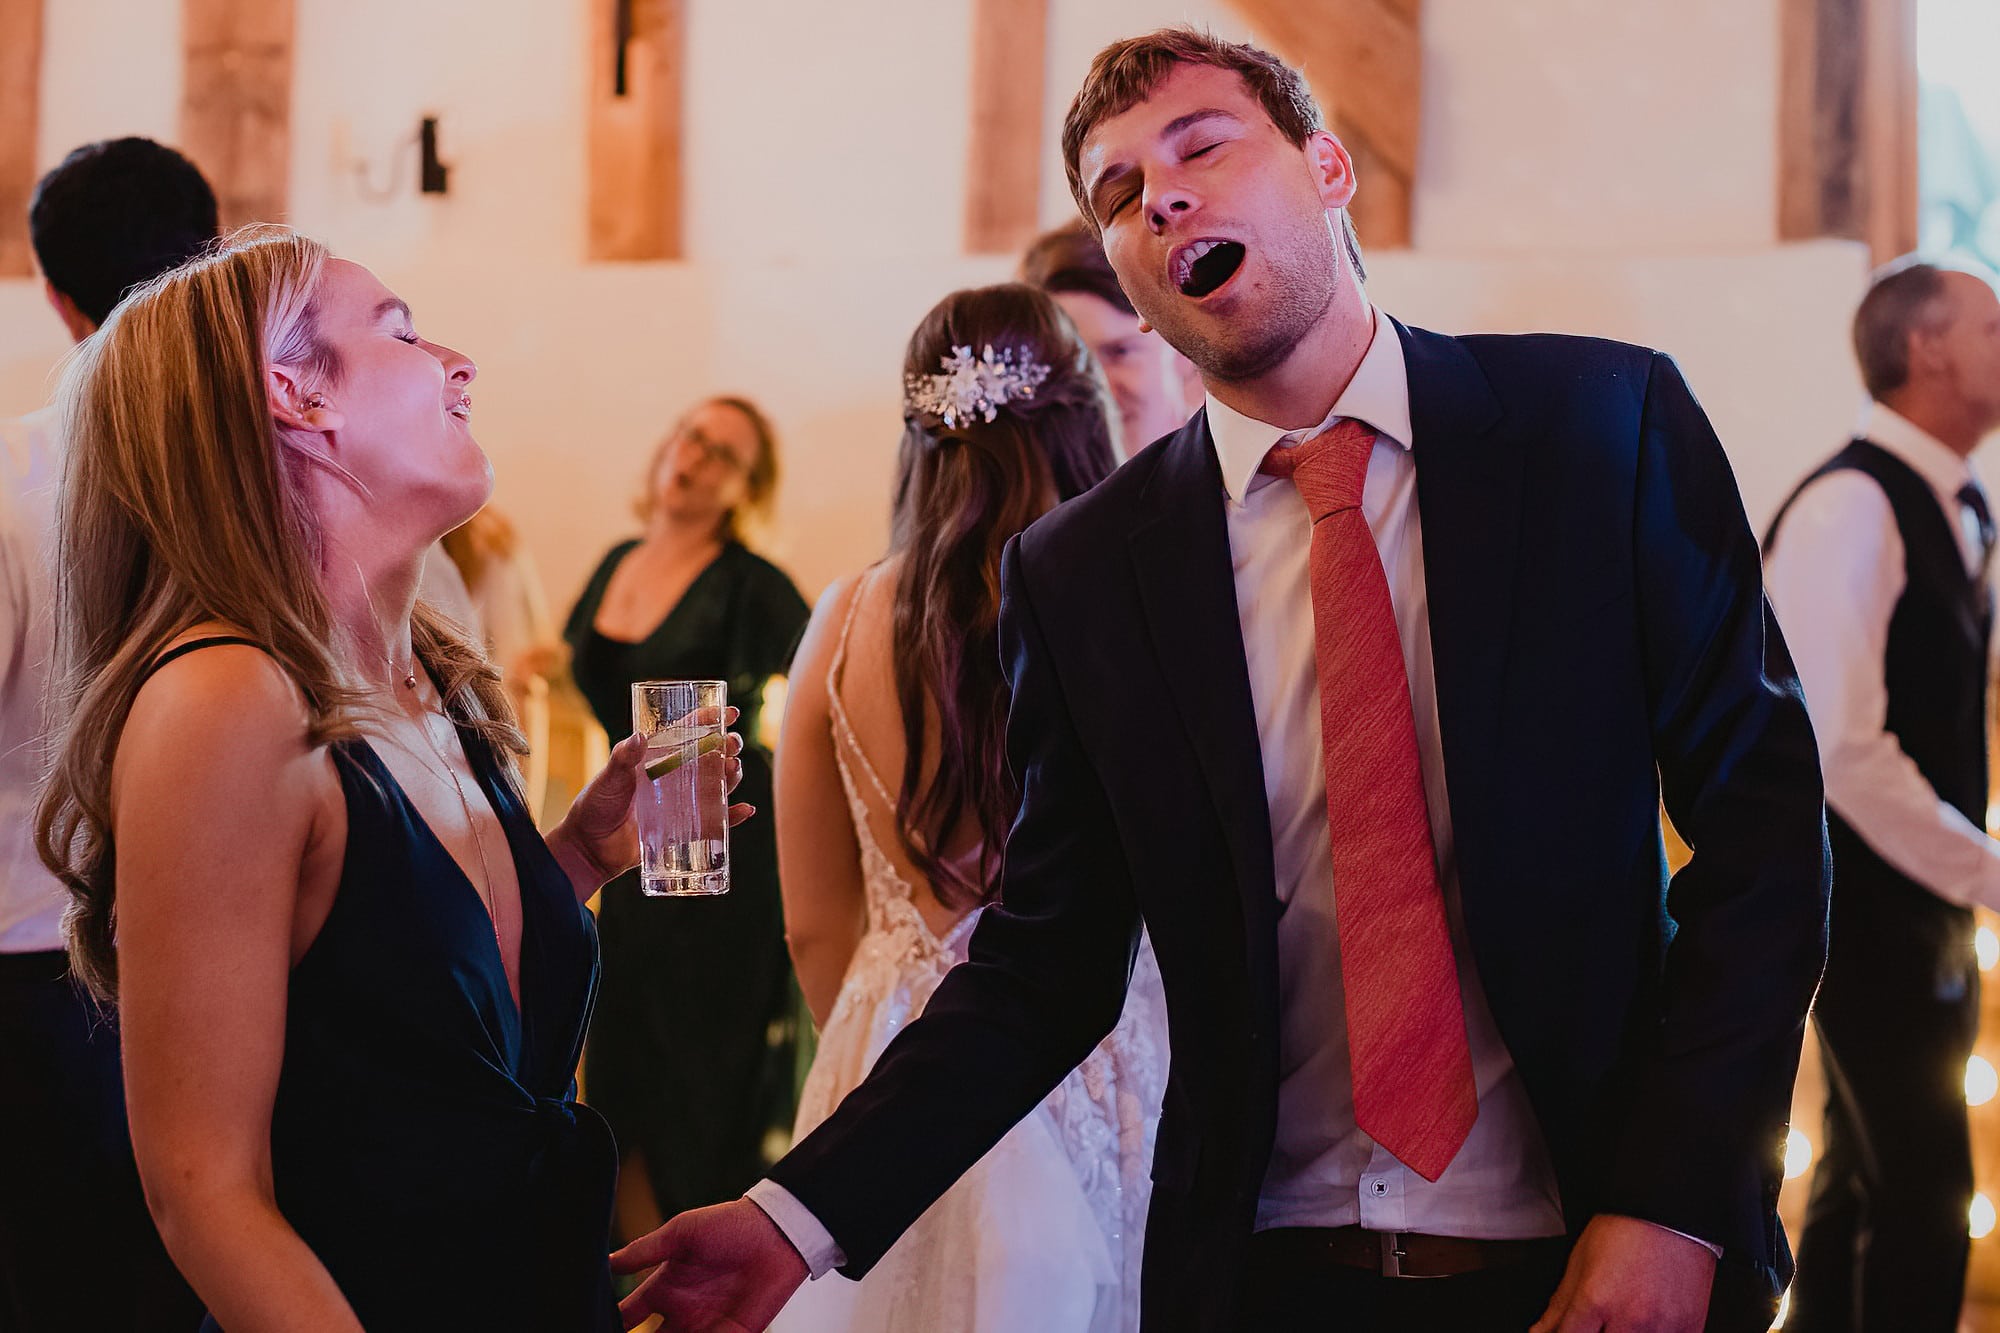 guests singing and dancing at wedding reception